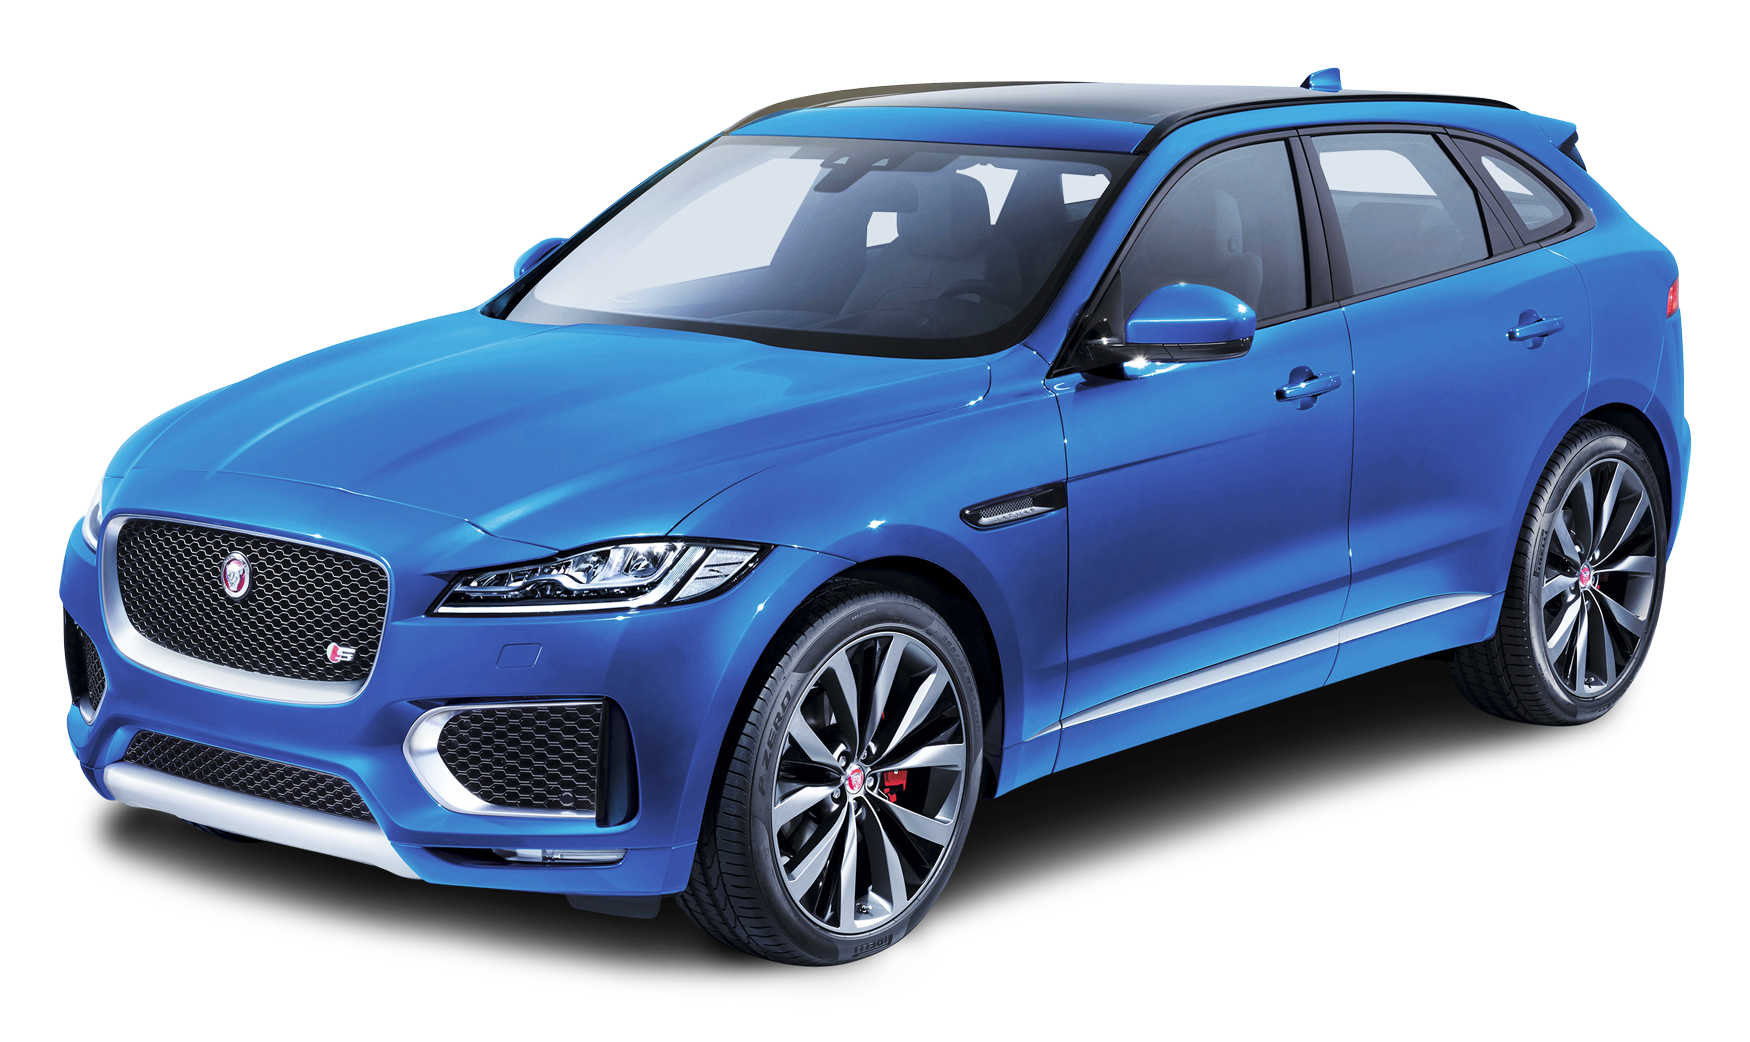 Download Blue Jaguar F PACE Side View Car PNG Image for Free.